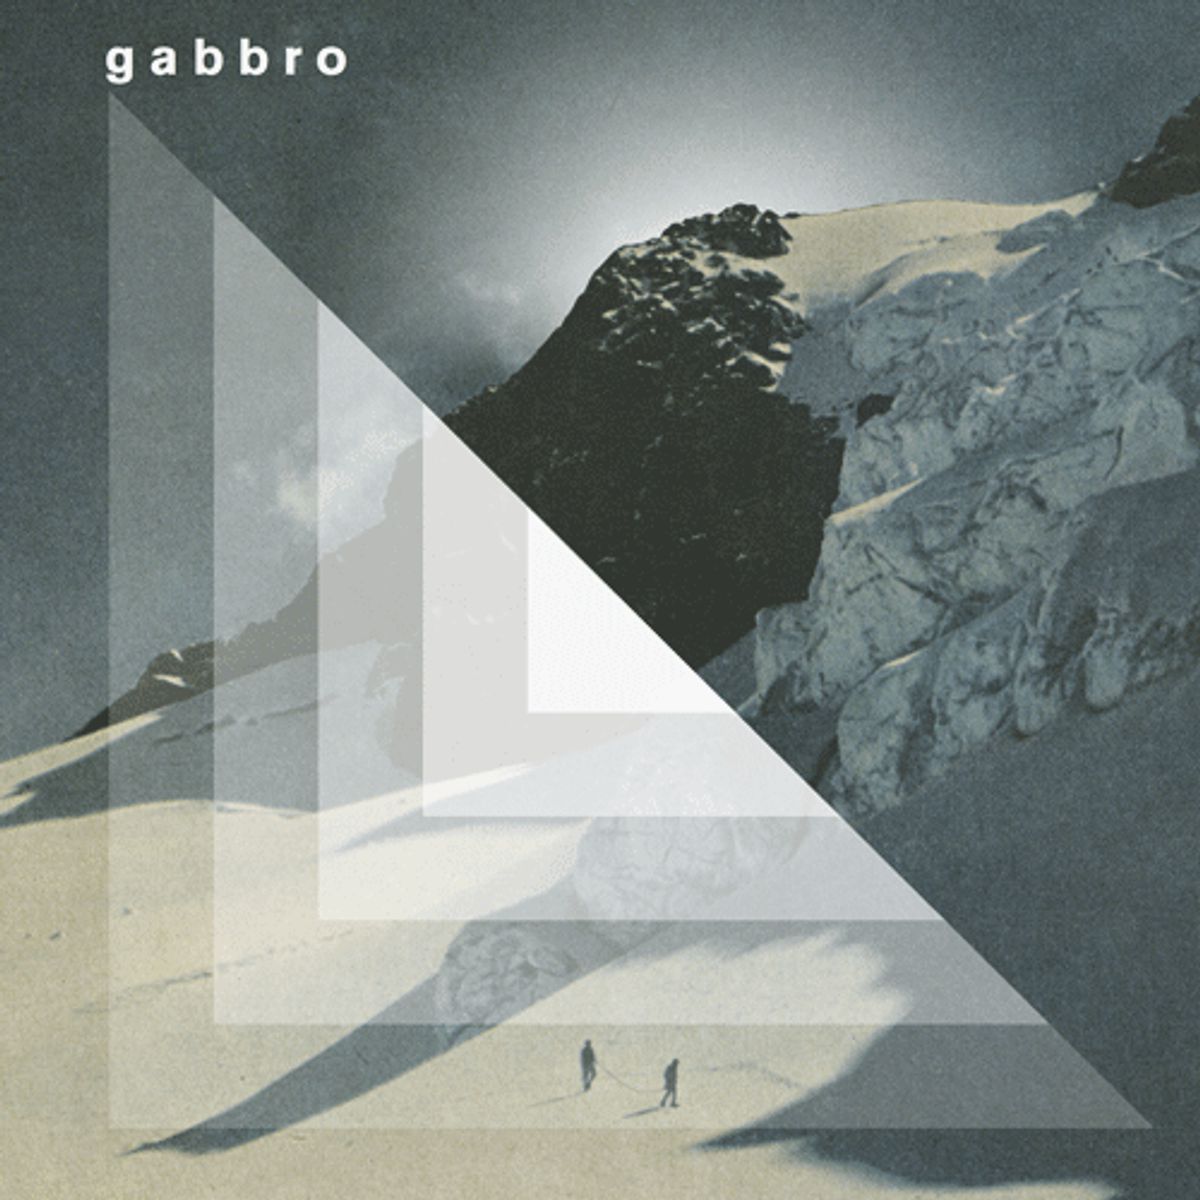 Gabbro